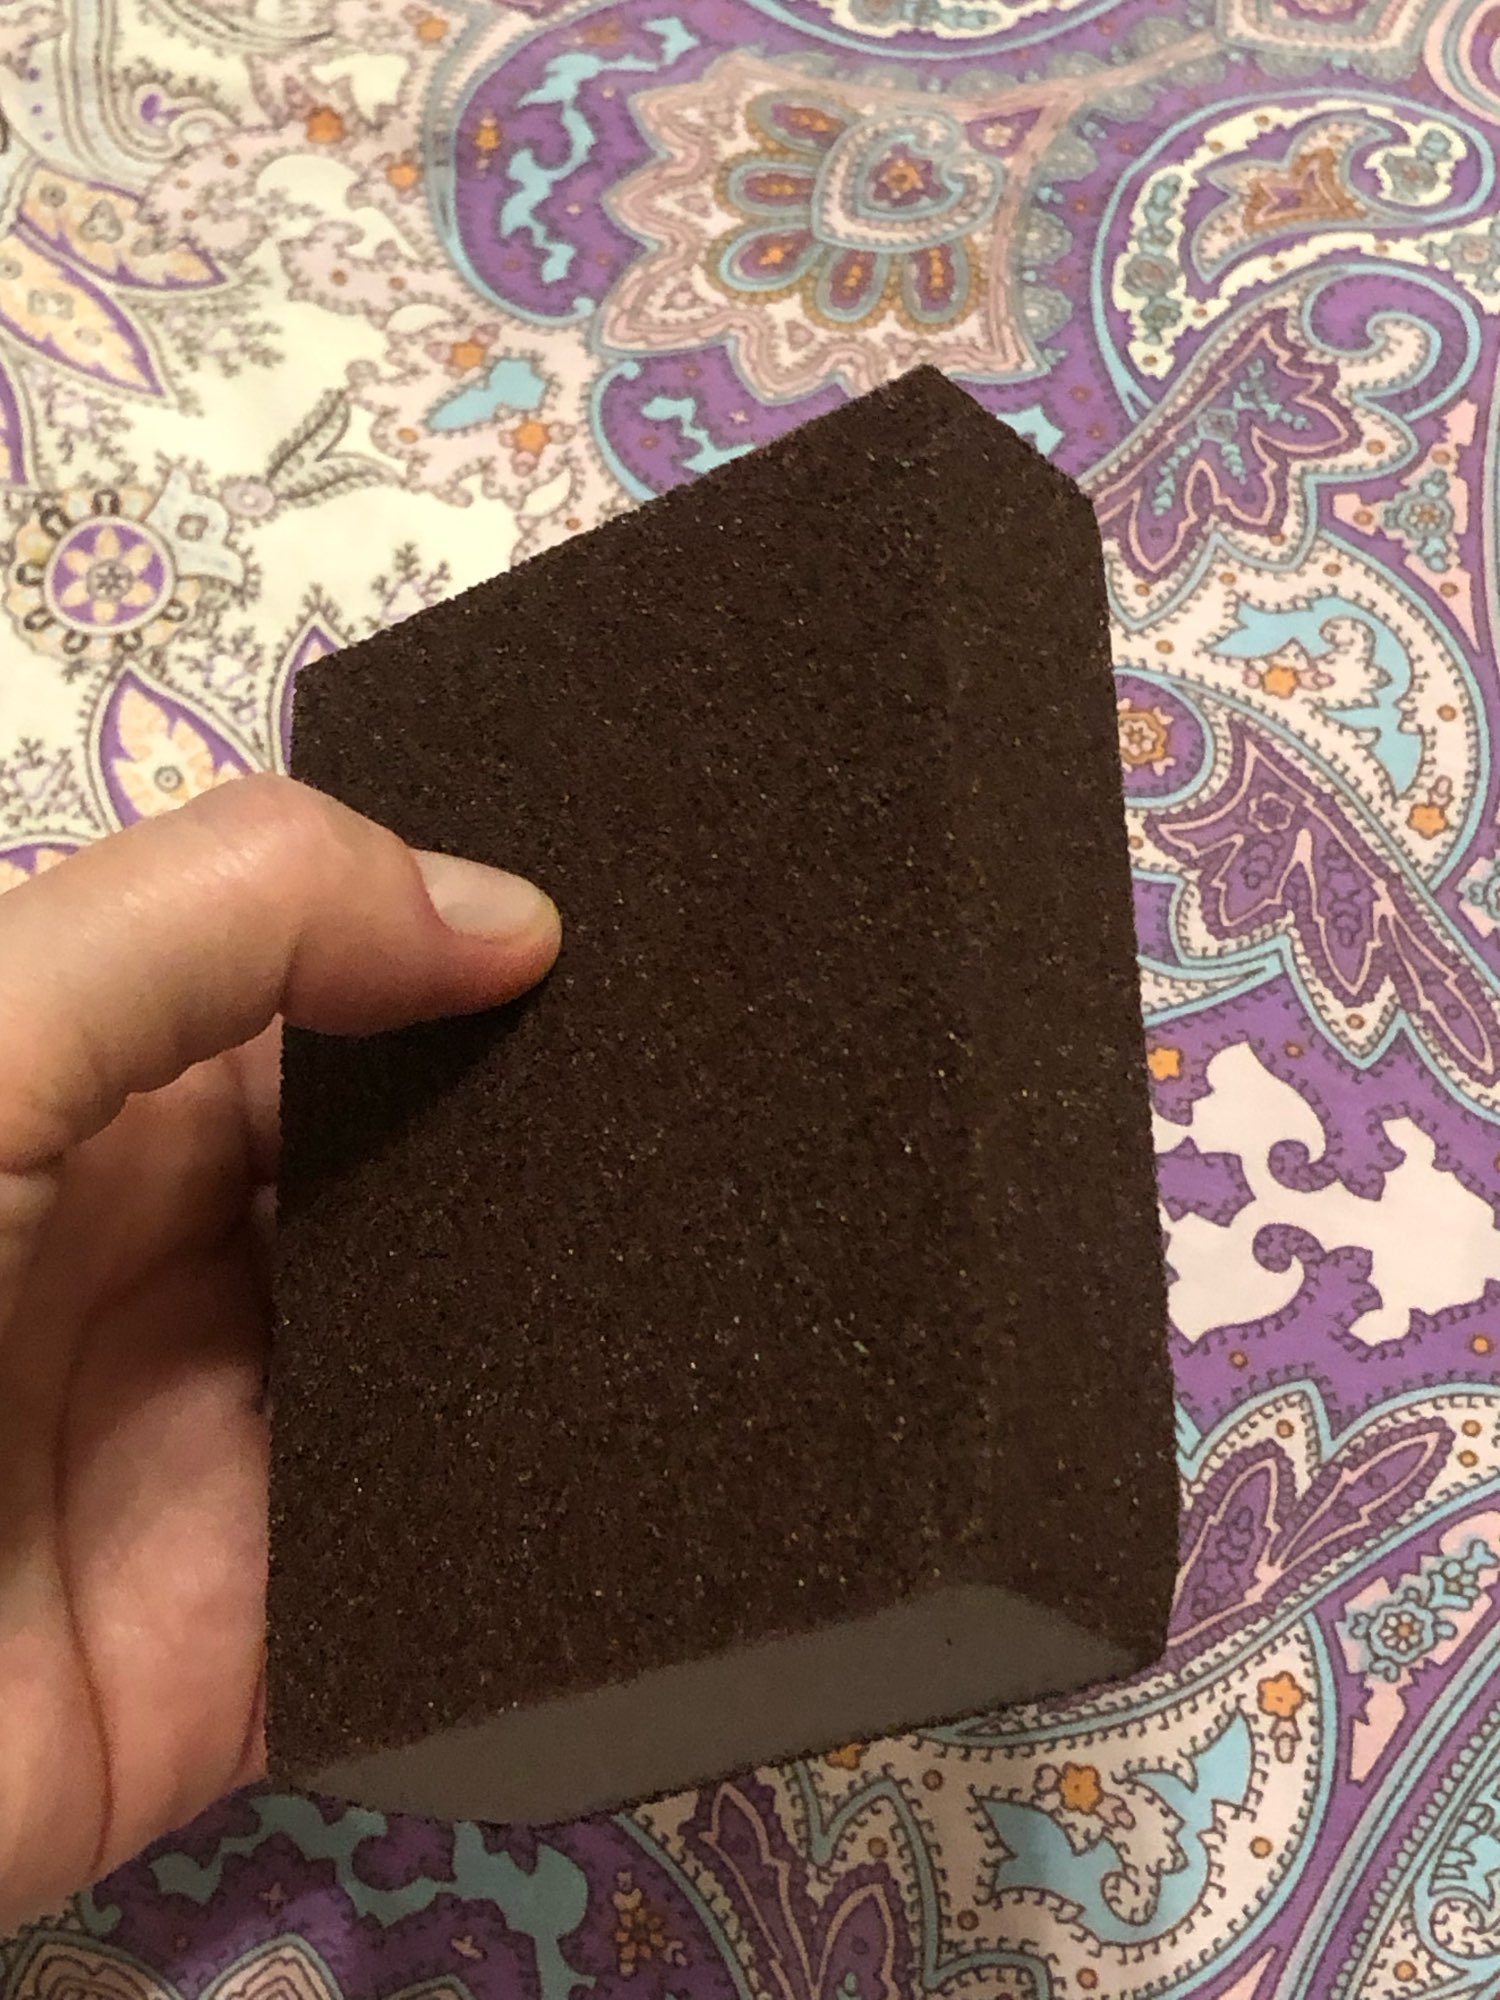 Magic Sponge Eraser for Descaling Stove Top Pots photo review